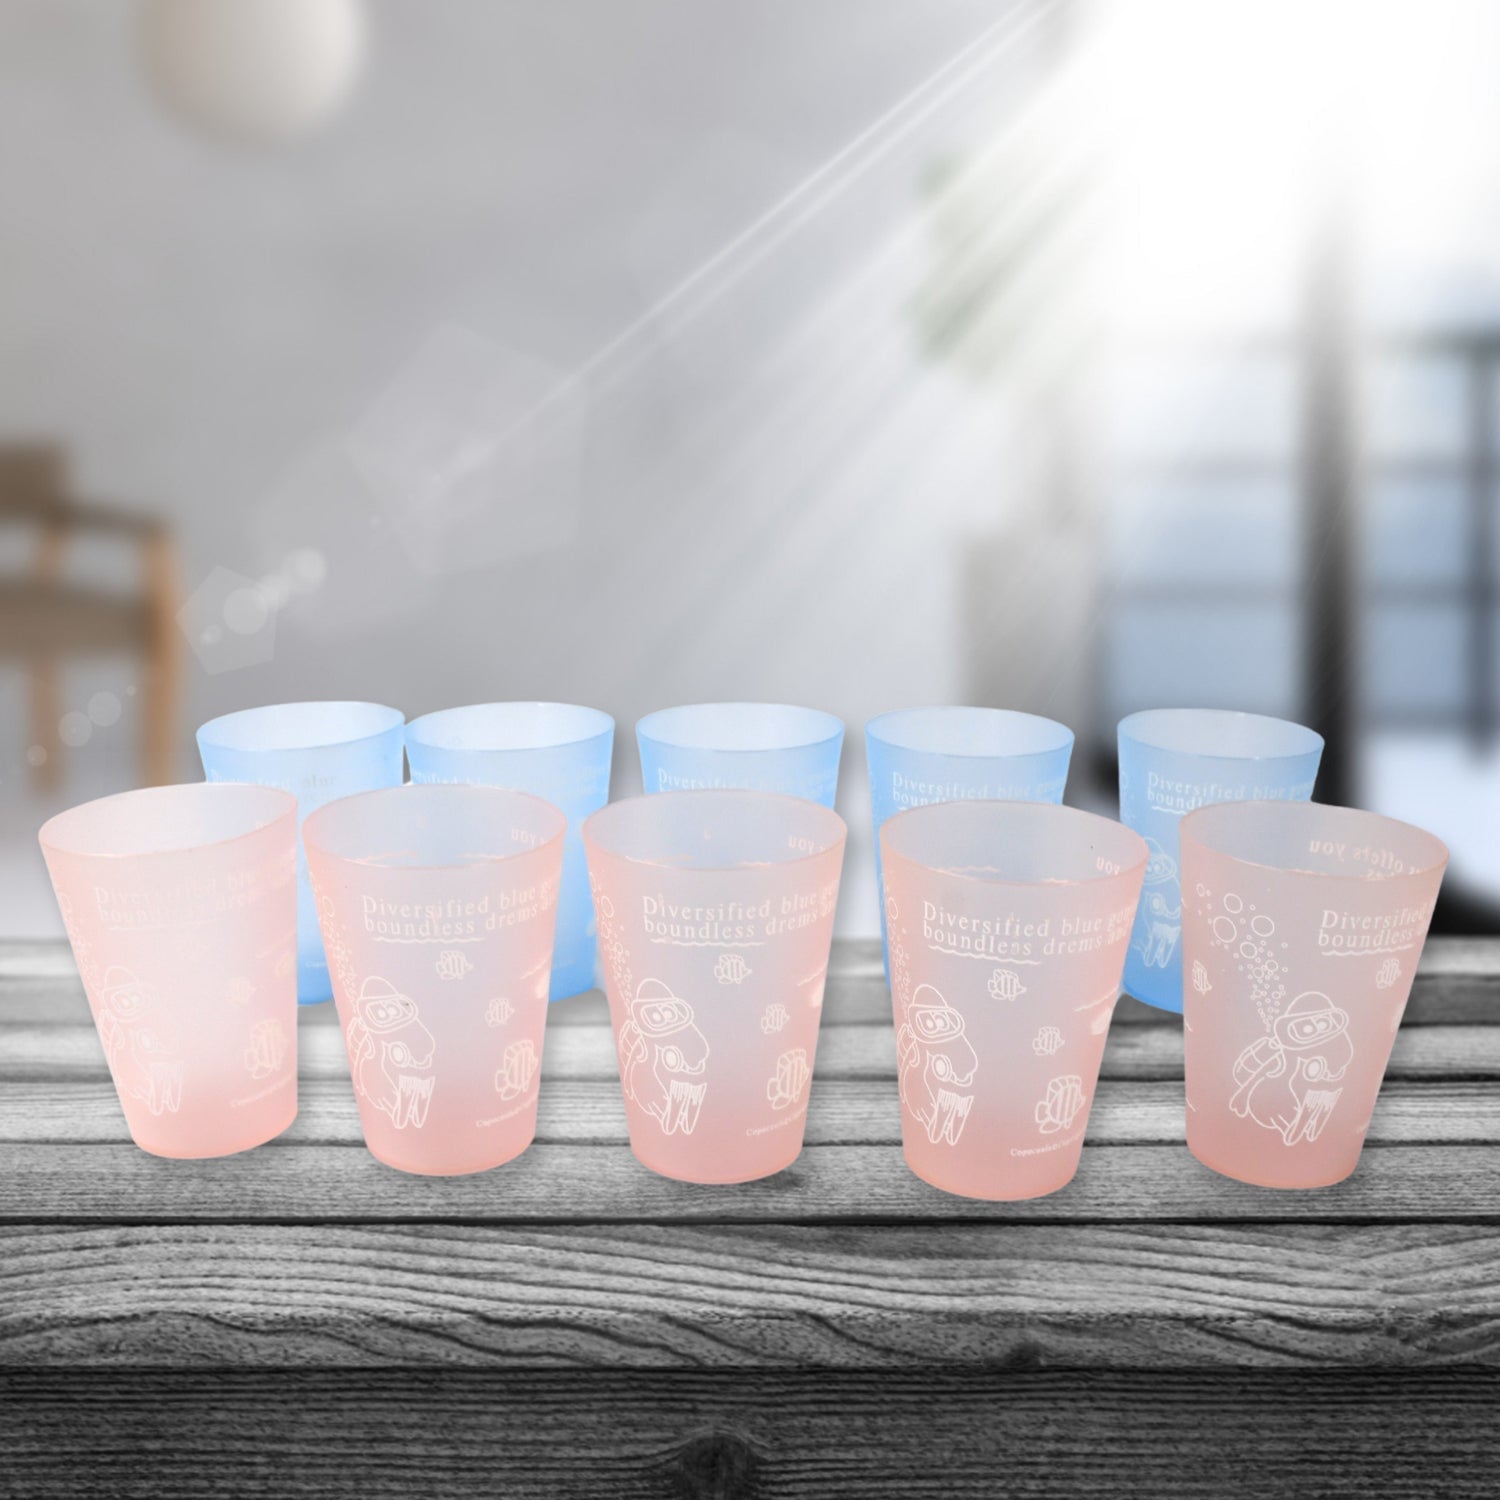 5610 PLASTIC LIGHTWEIGHT GLASS REUSABLE DRINKING GLASS DISHWASHER SAFE BEVERAGE GLASSES FOR KITCHEN WATER GLASSES (10 Pc Set)